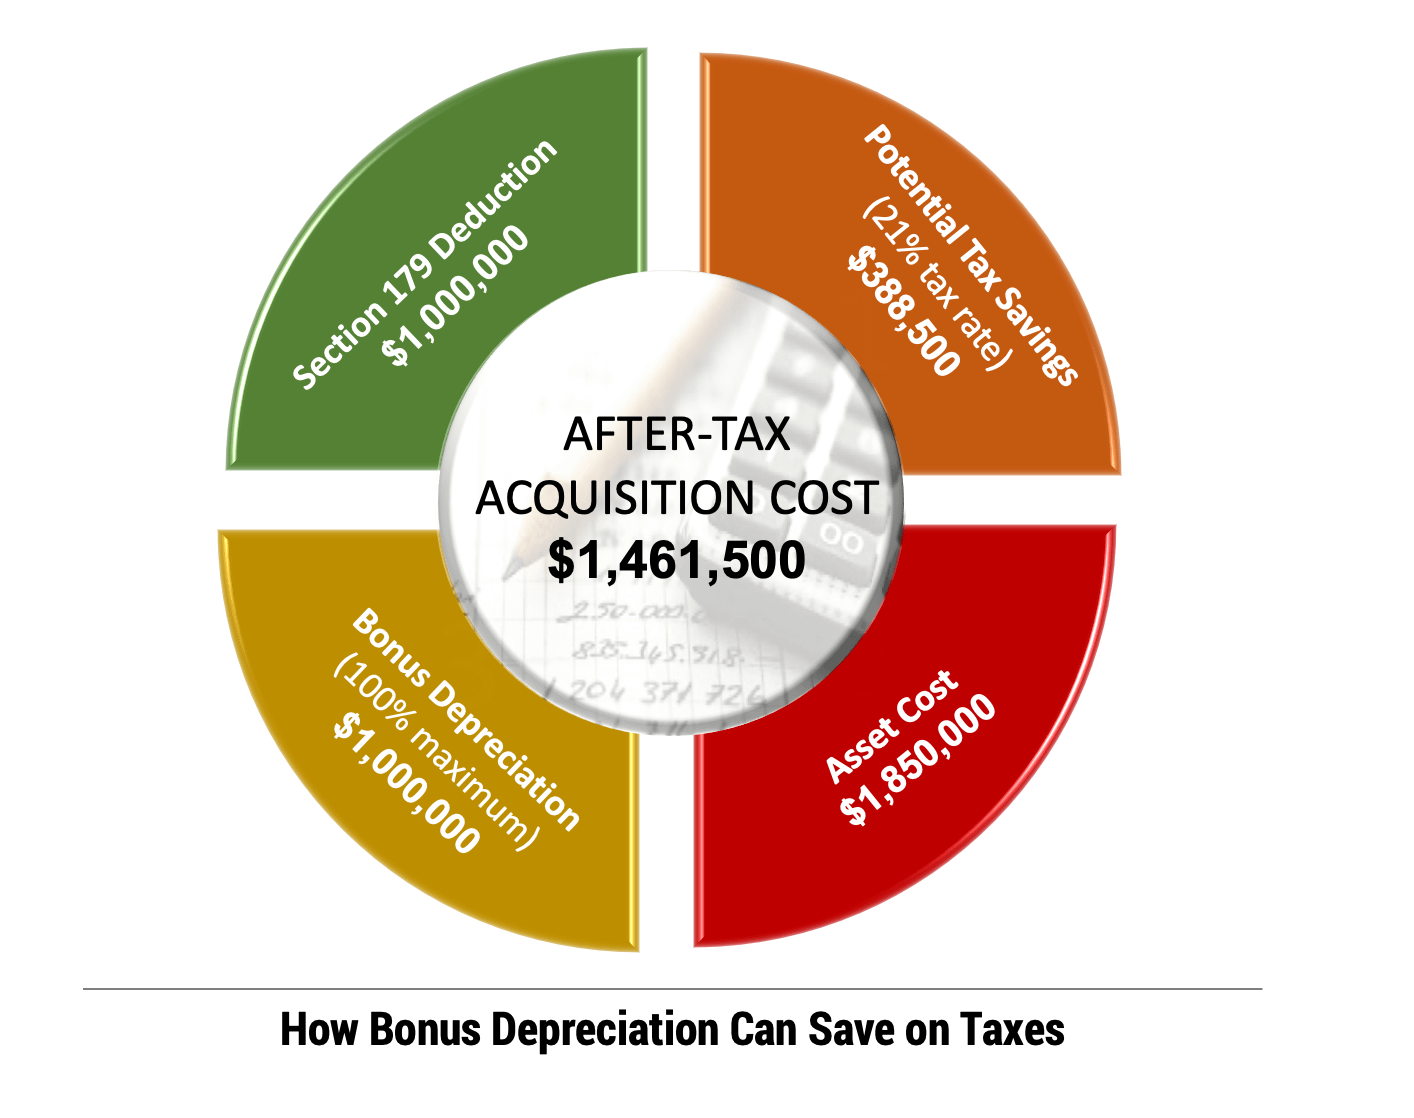 Valuable Tax Savings on Capital Equipment Through Bonus Depreciation